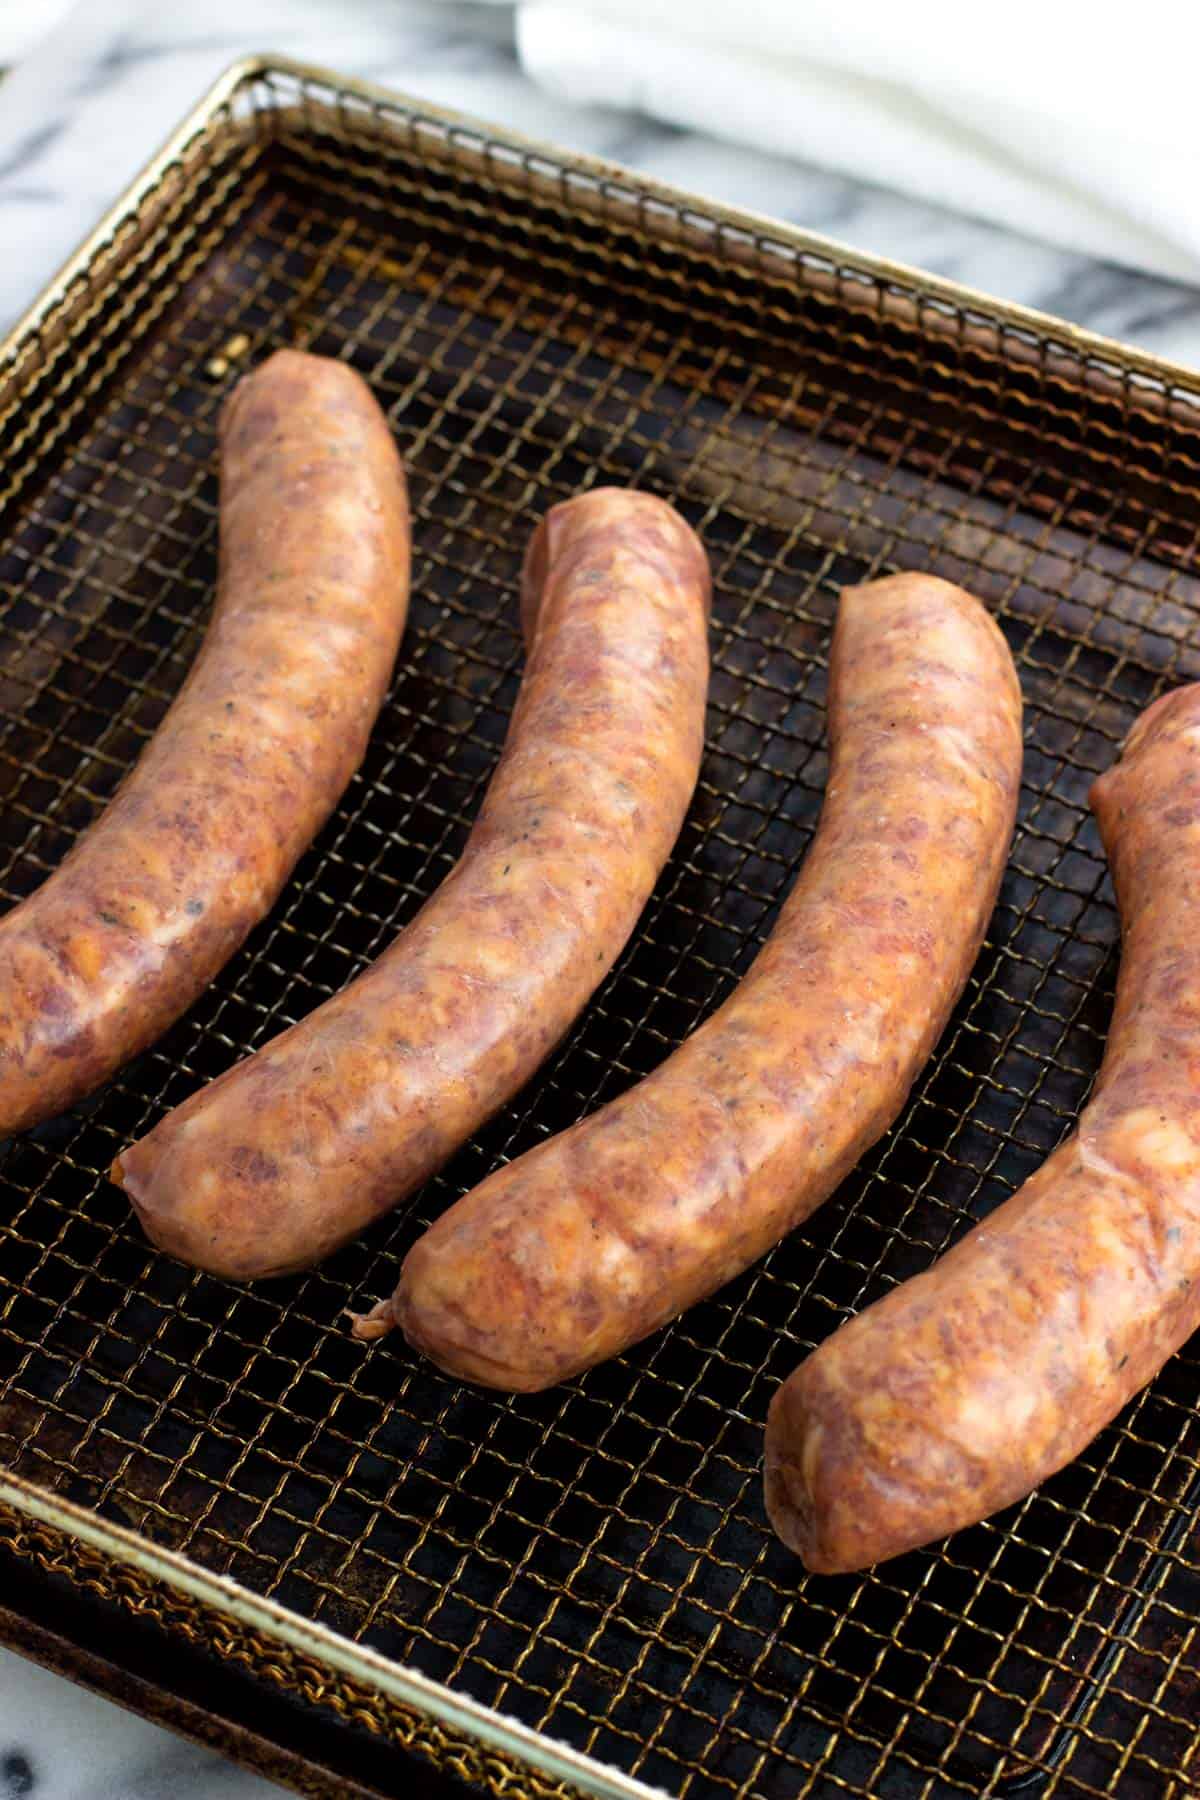 Four raw Italian sausage links on an air fryer basket.